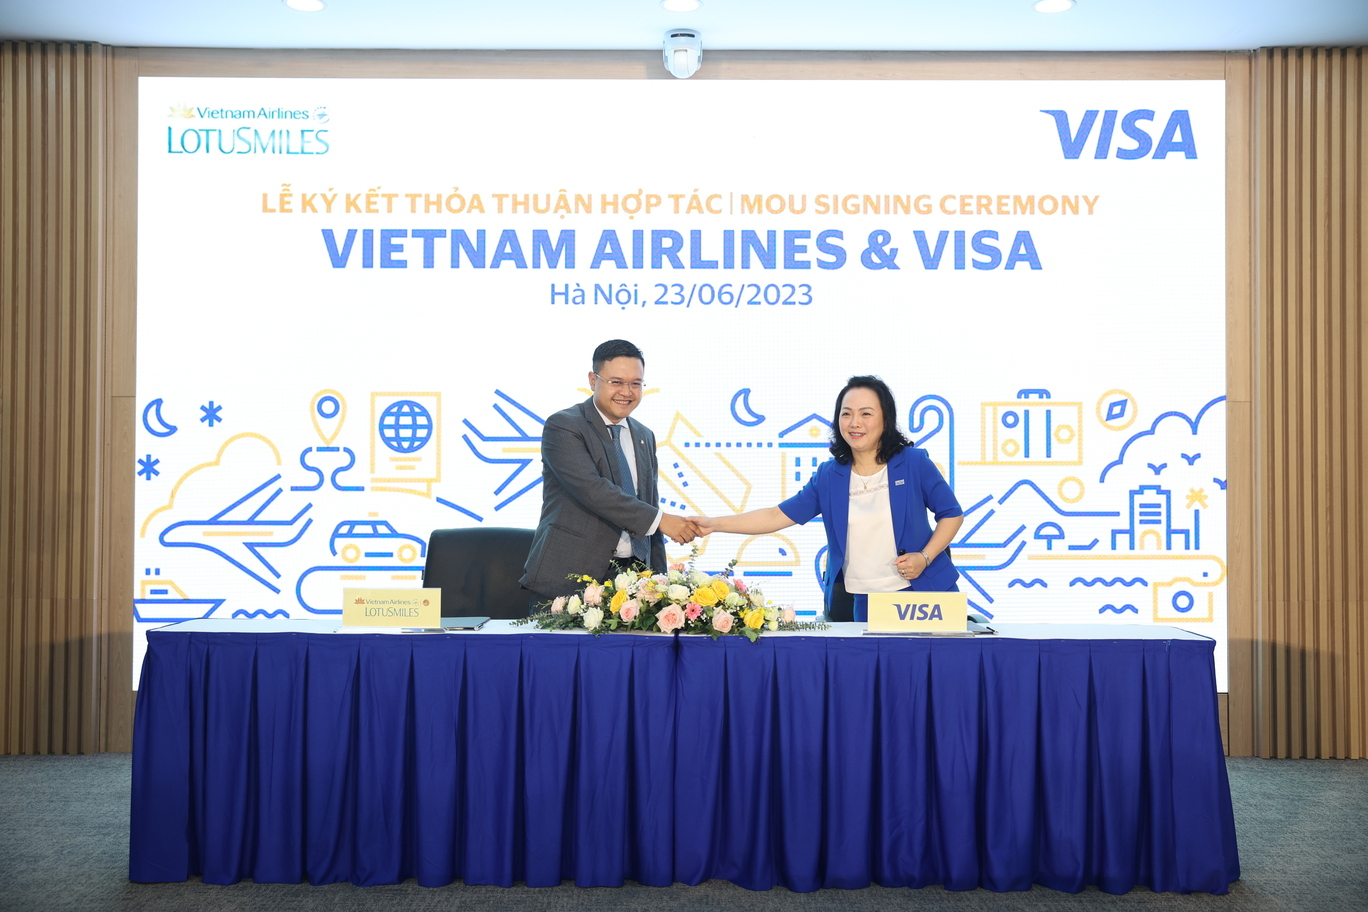 vietnam airlines dong hanh cung visa trong olympic paris 2024 hinh 1